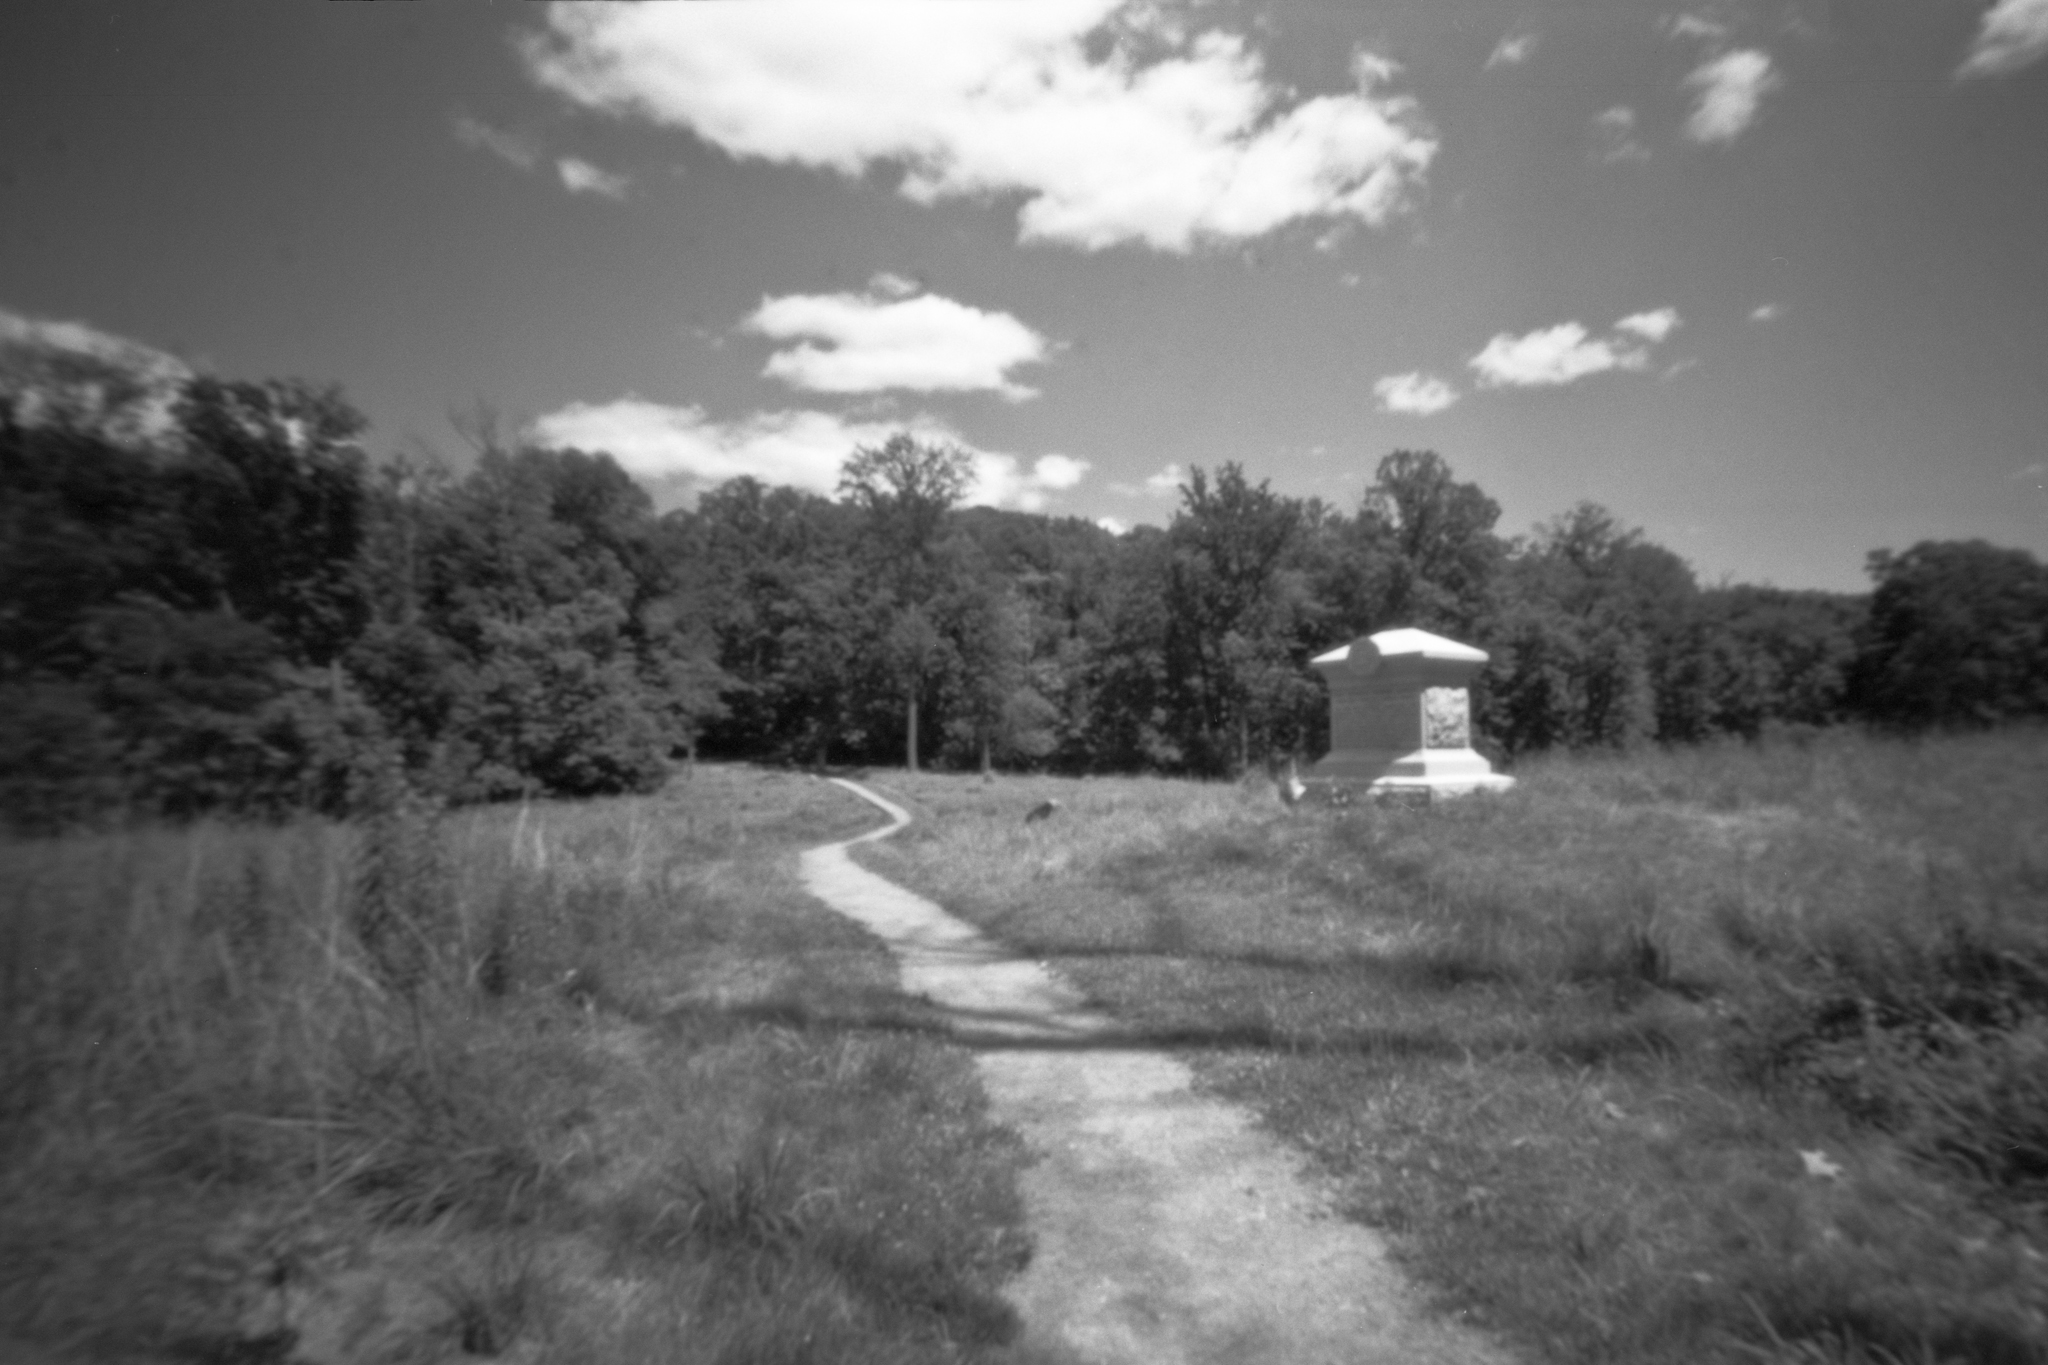  Gettysburg National Military park. Gettysburg, Pennsylvania.&nbsp; Zero Image 6x9. 